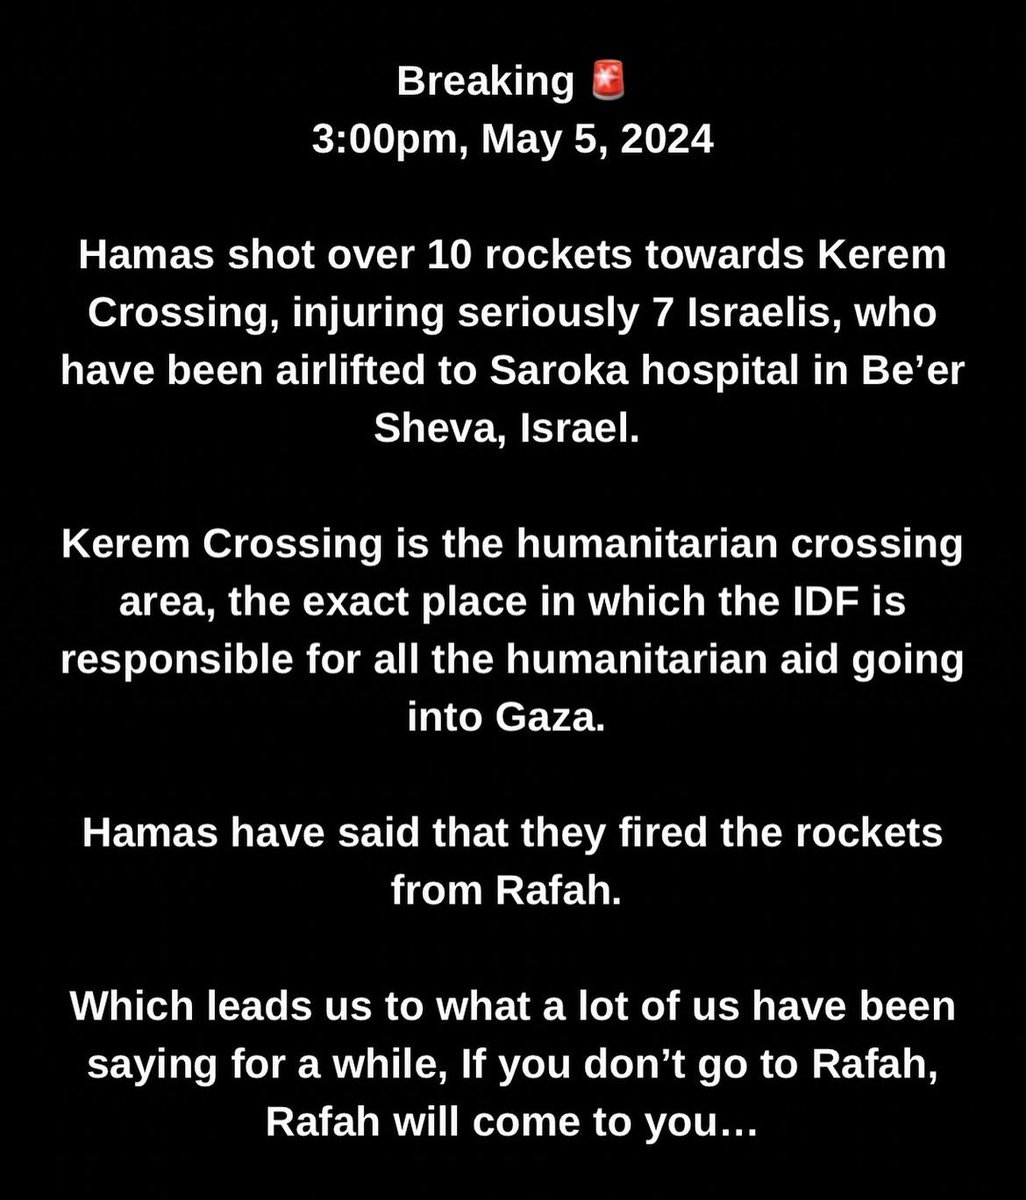 BREAKING! #israelunderattack #rafah #standwithisrael #hamasisisis